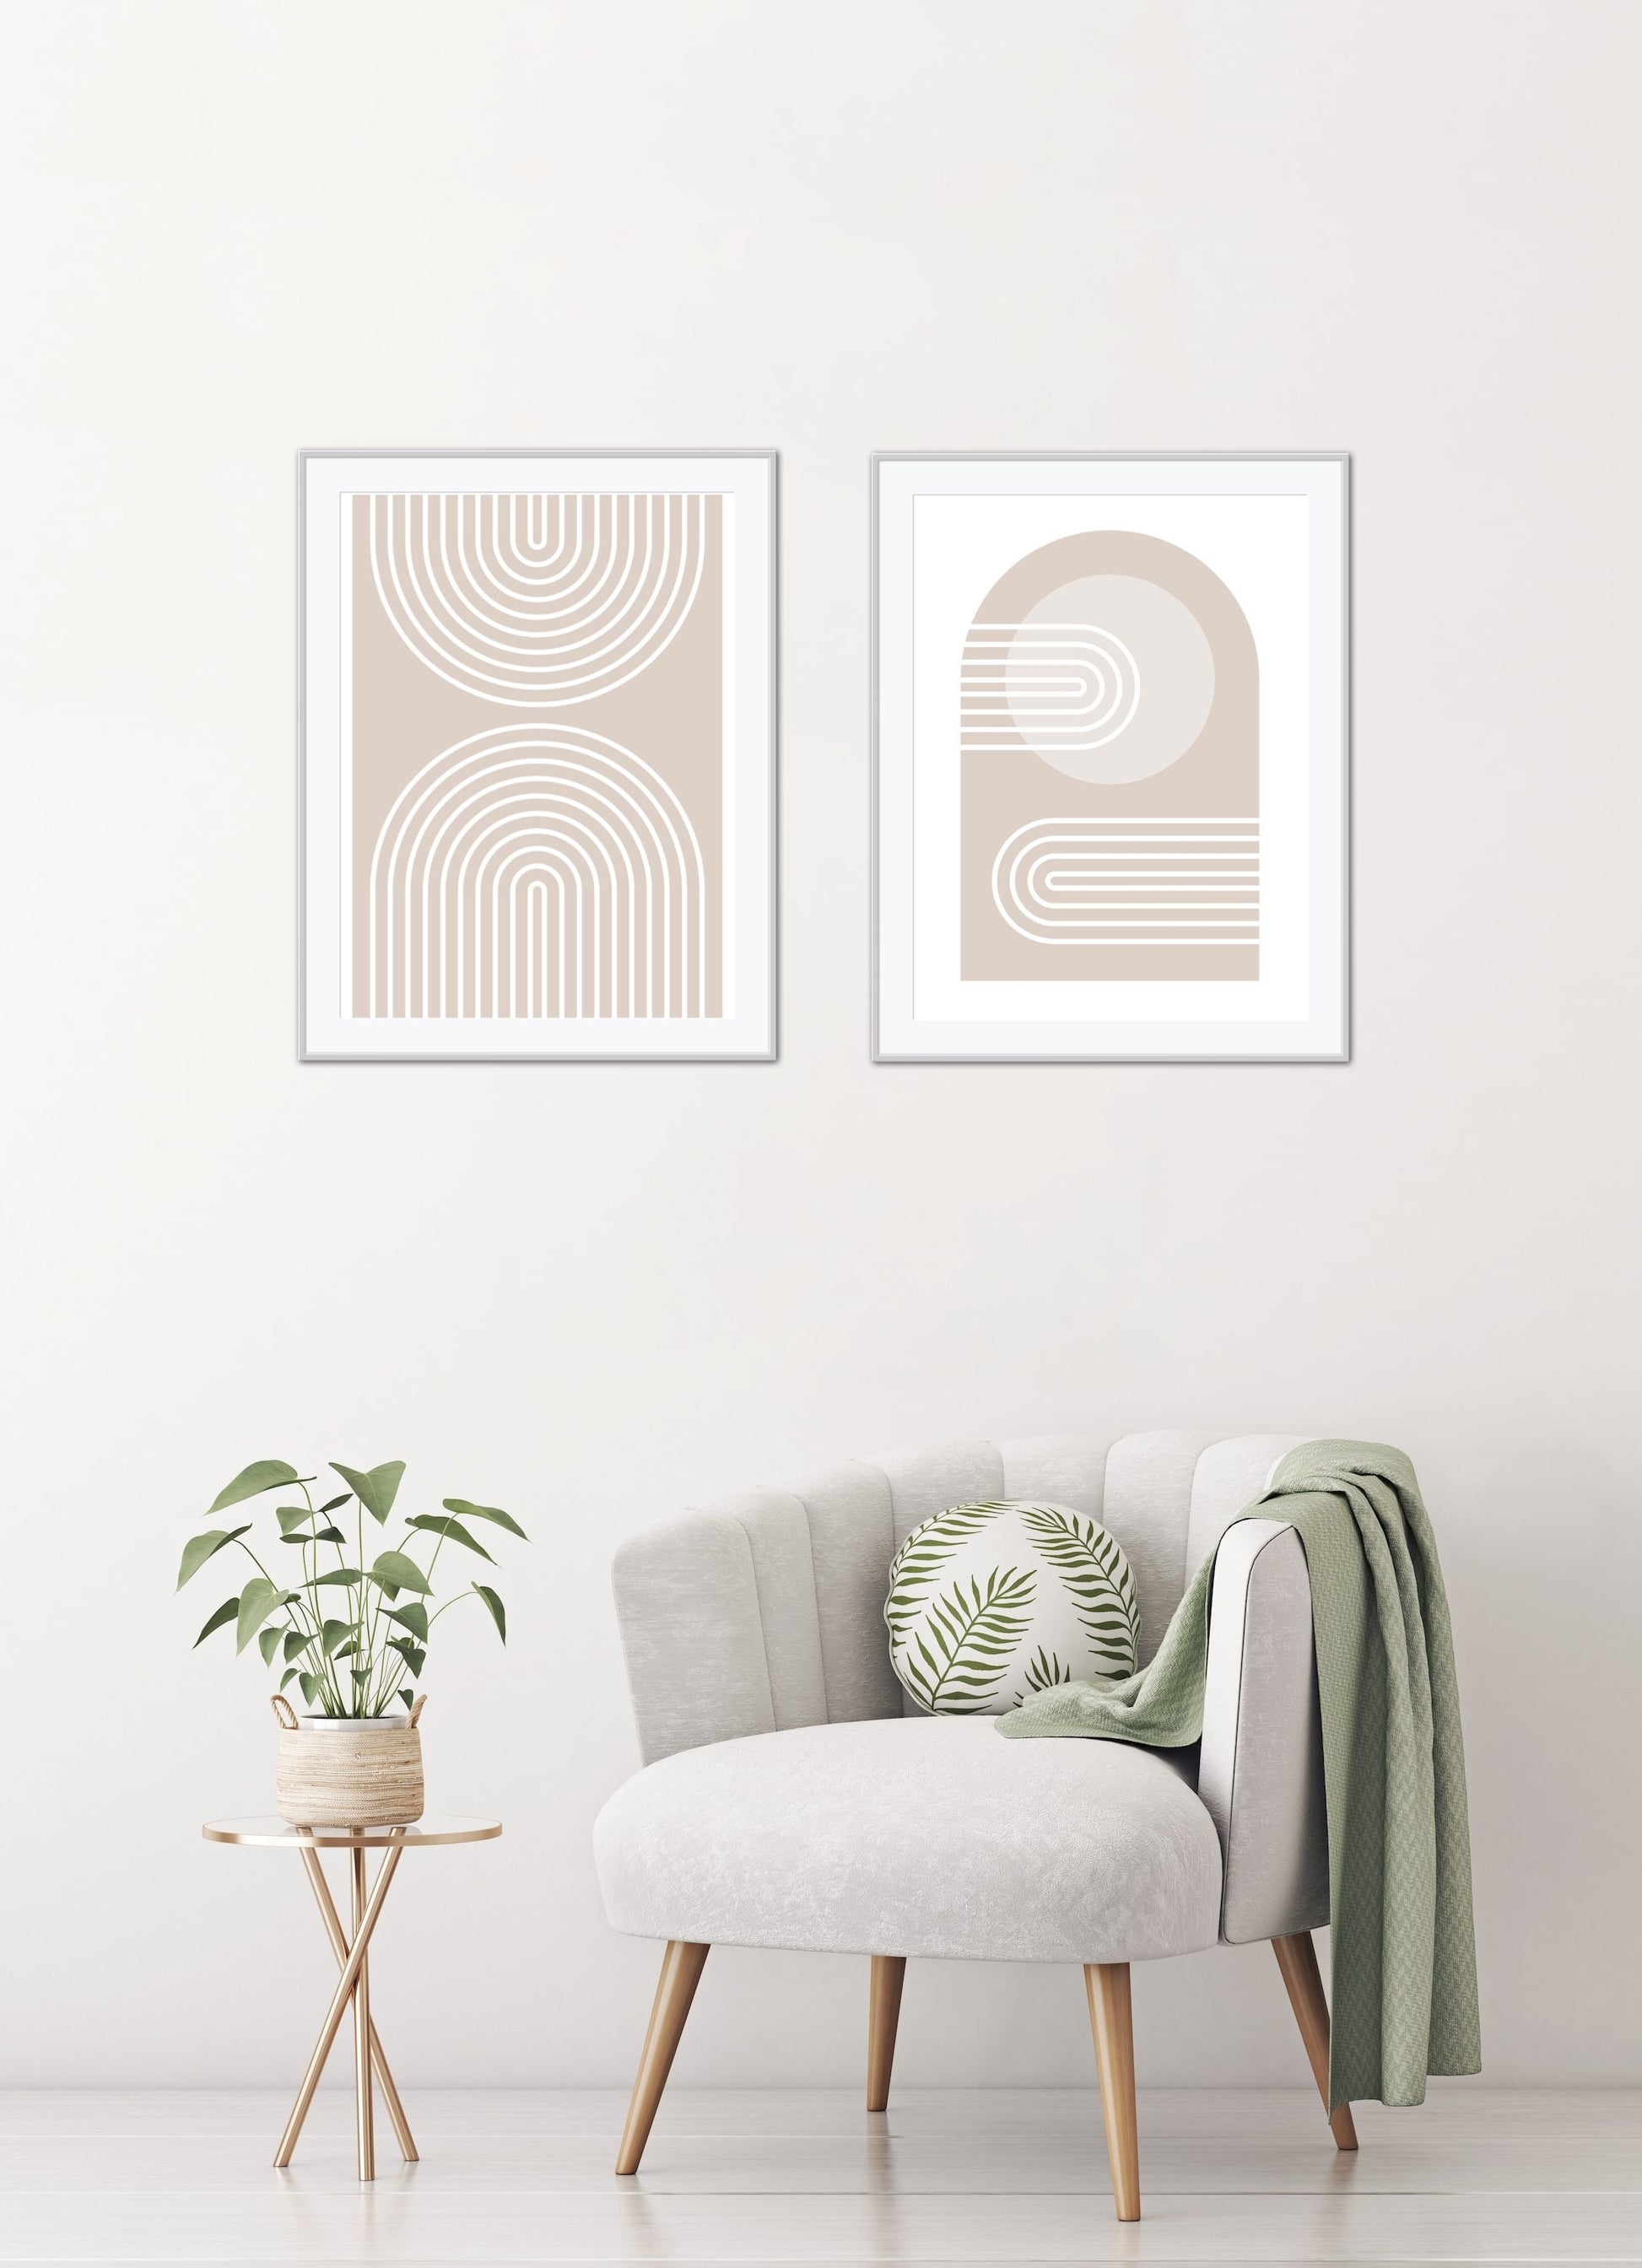 Boho poster set of 4 DIGITAL PRINTS, cream abstract art, neutral minimalistic geometric Wall Art, Beige wall art, Abstract Boho Wall Prints